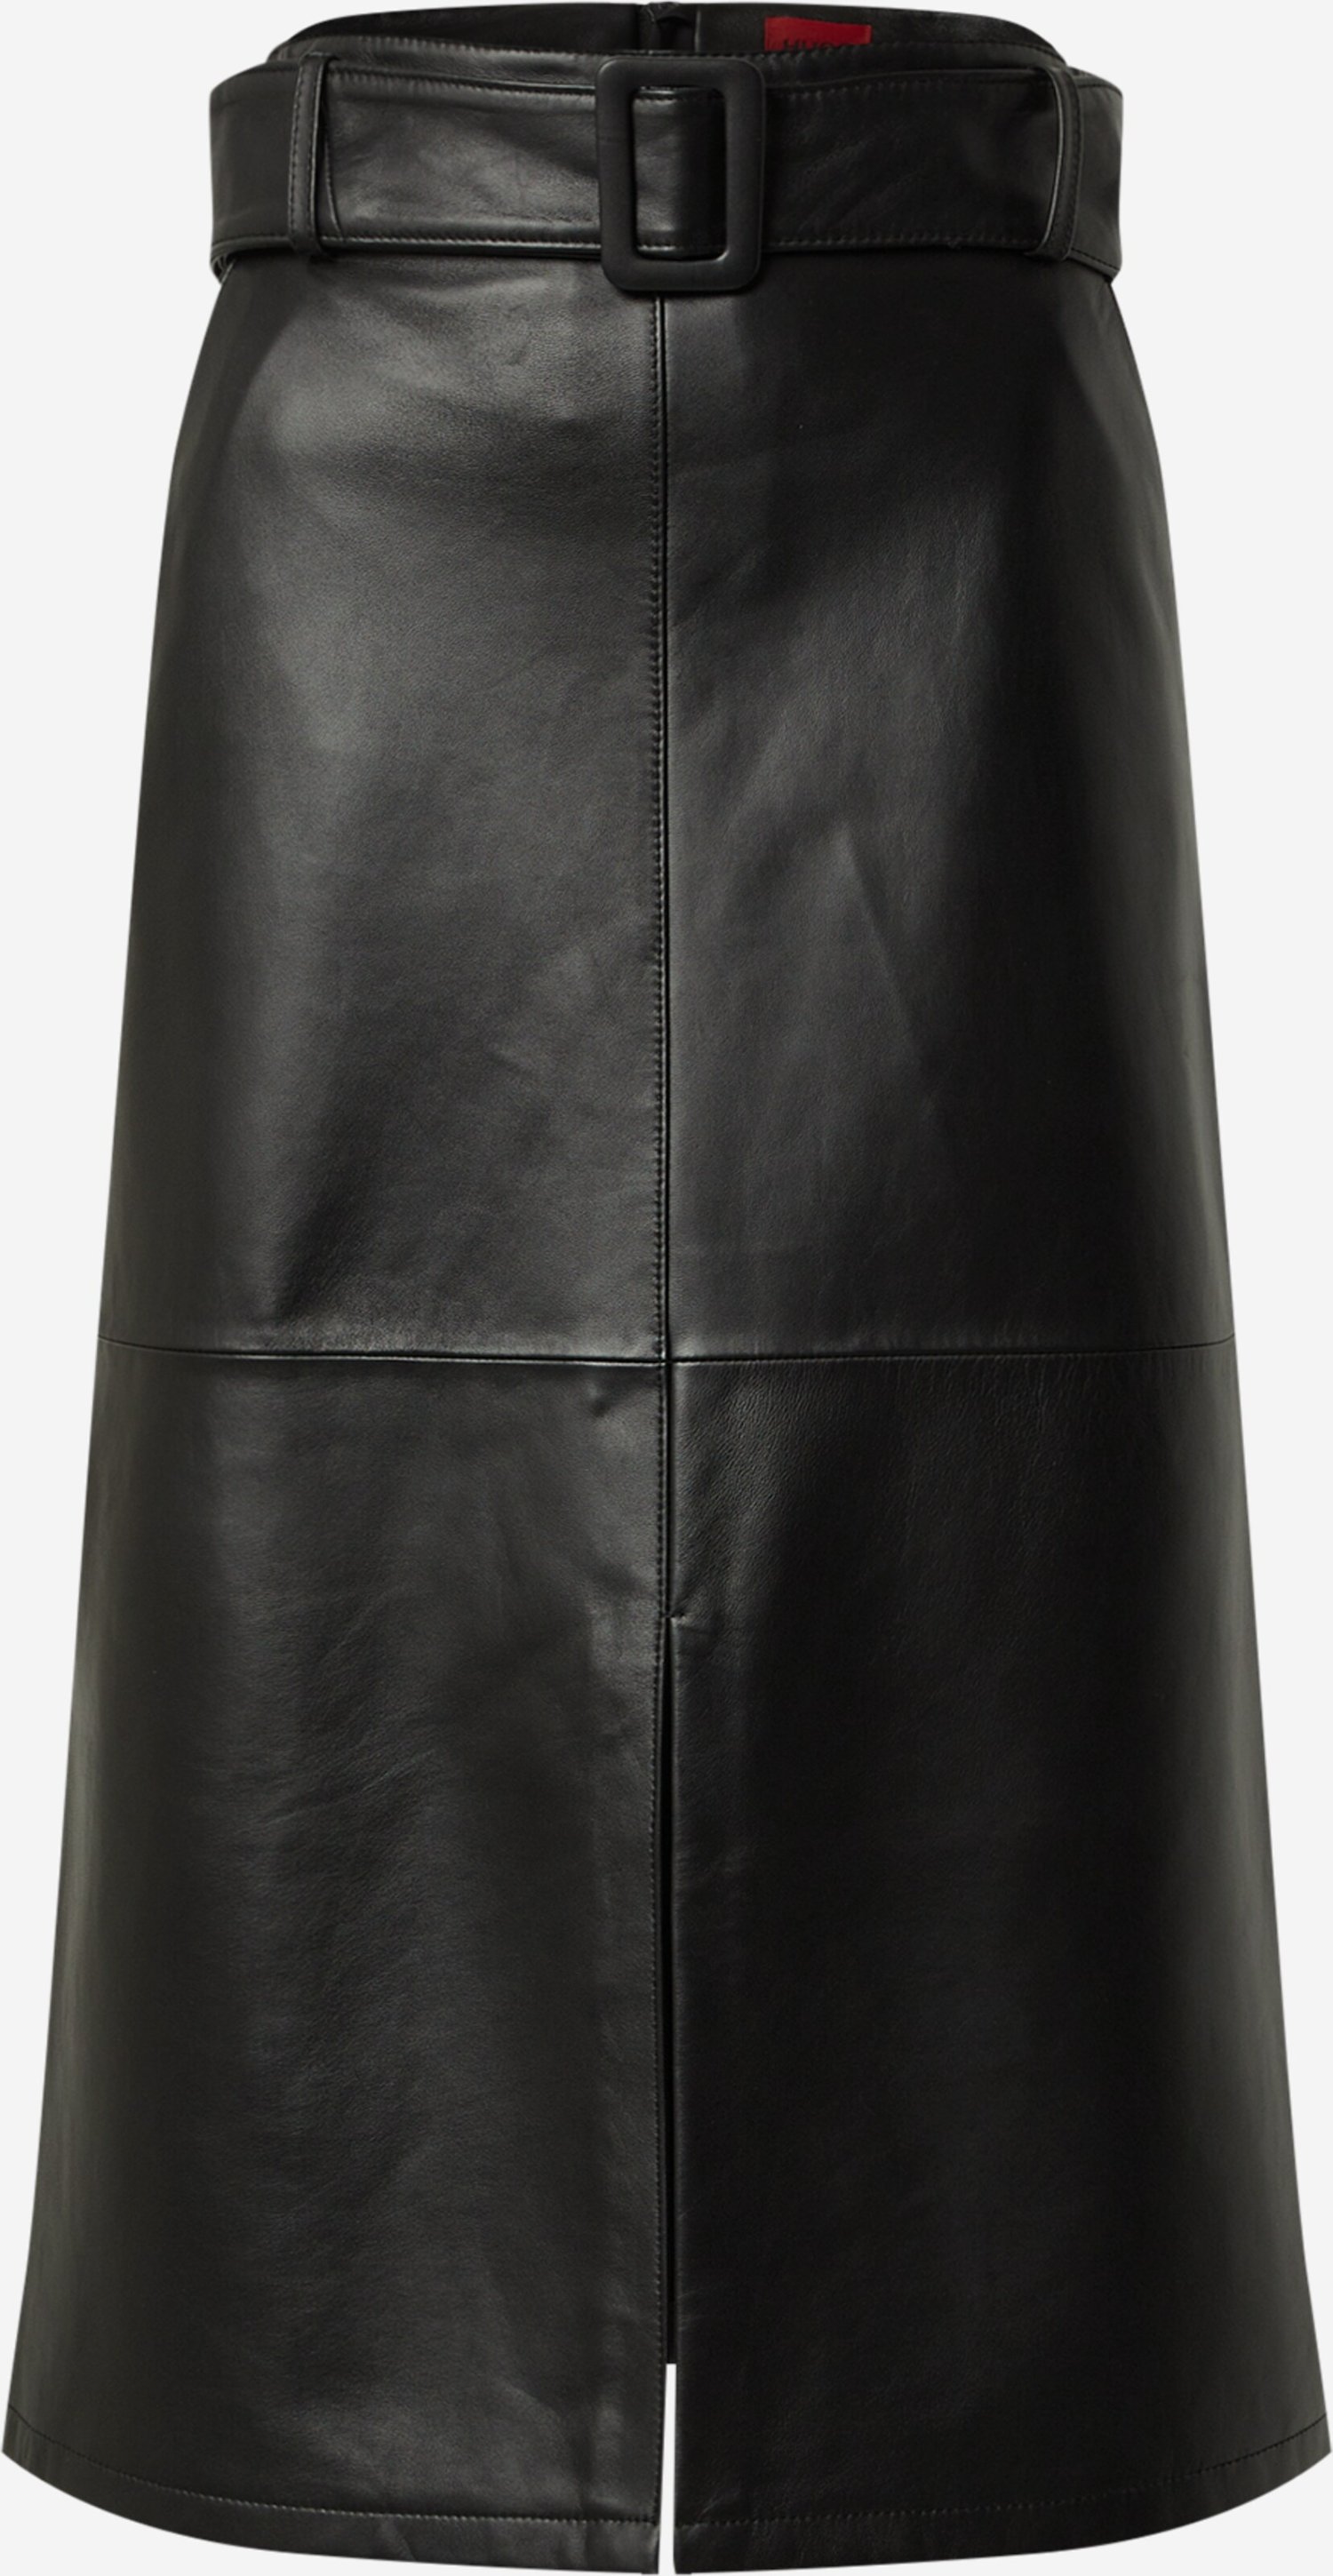 Hugo Boss Leshina Skirt in Black Leather — UFO No More